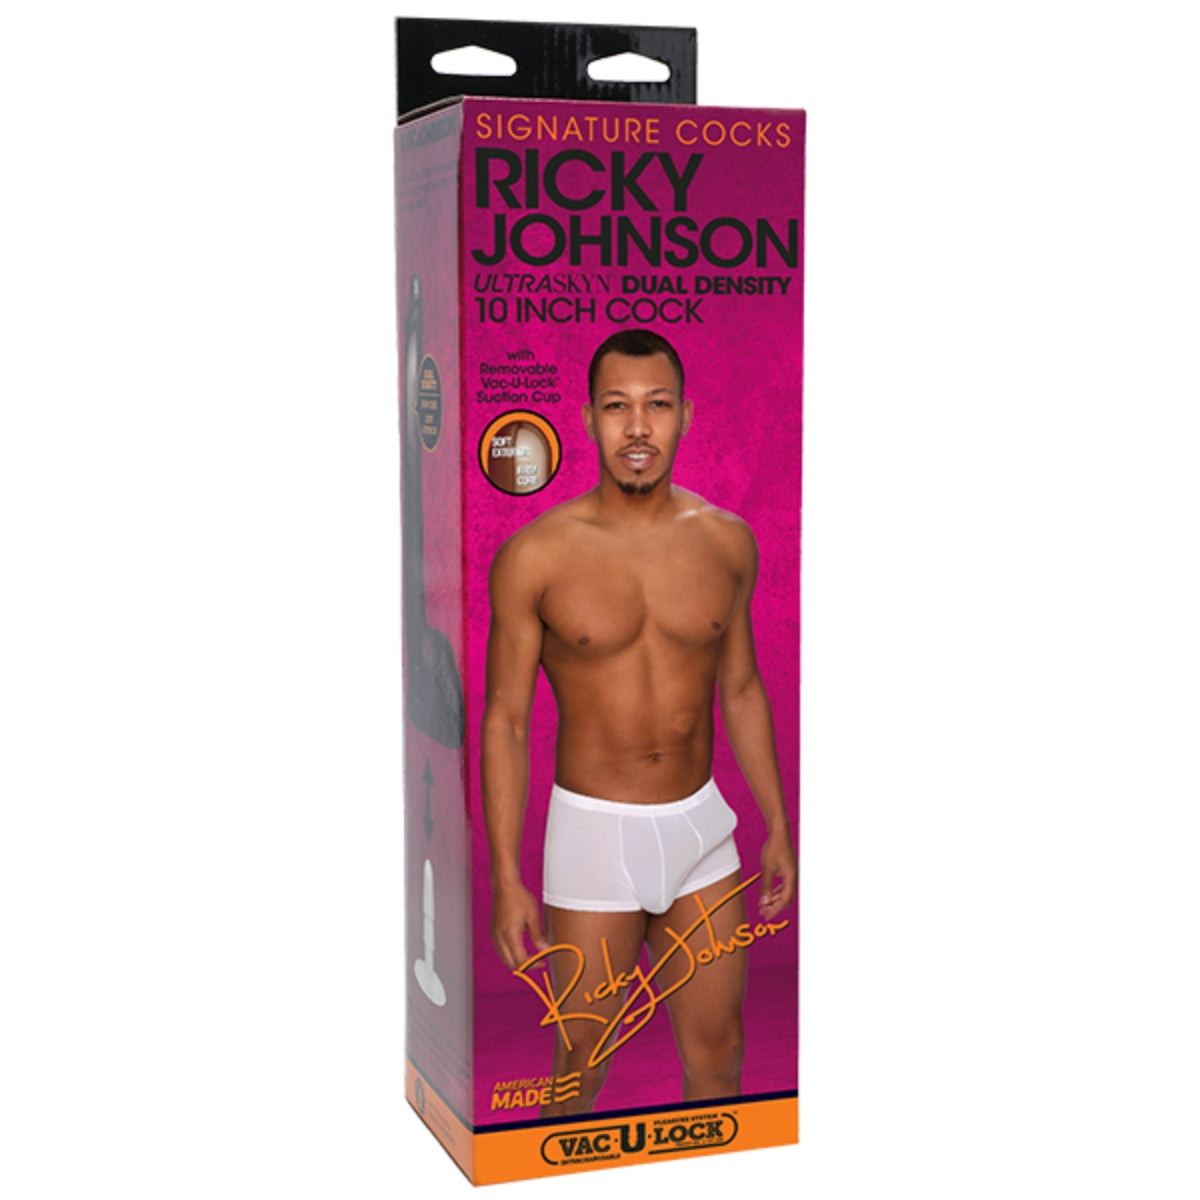 Signature Cocks Ricky Johnson Ultraskyn Vac-U-Lock Dildo Brown 10 Inch